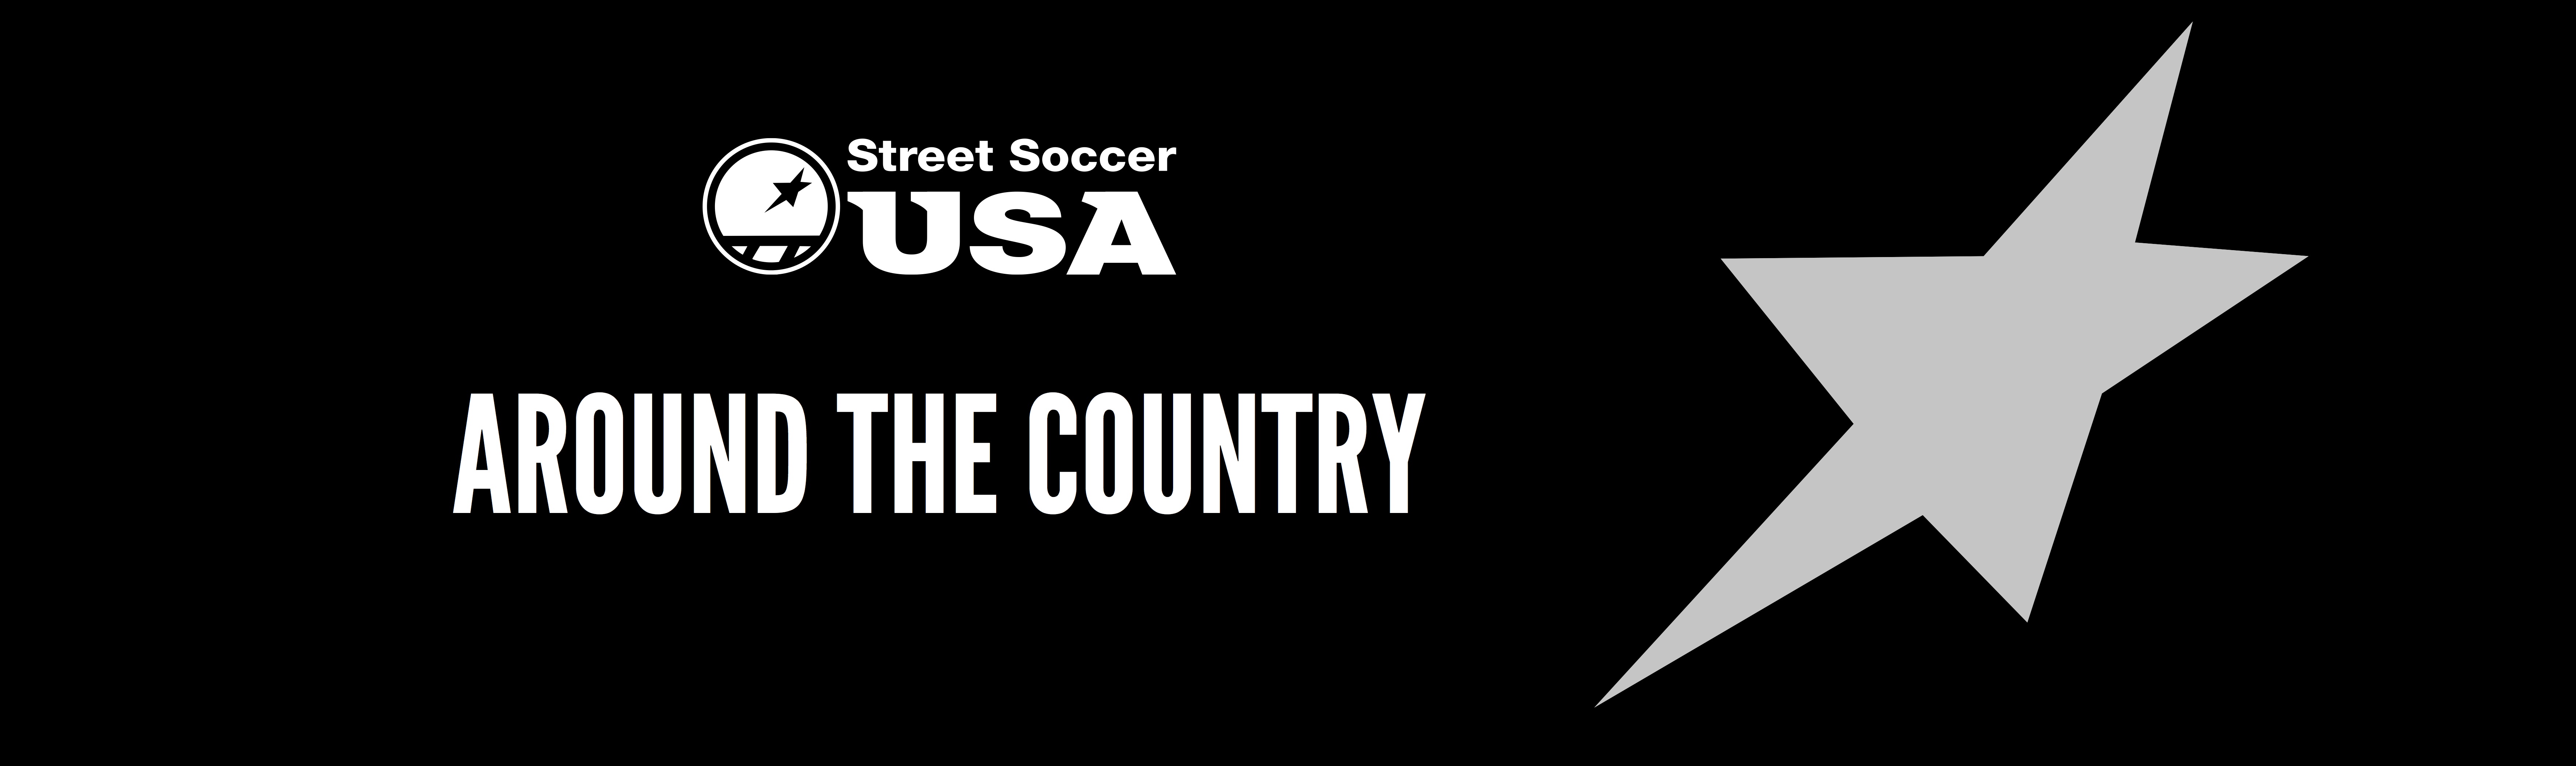 Around the Country - New York - Street Soccer USA